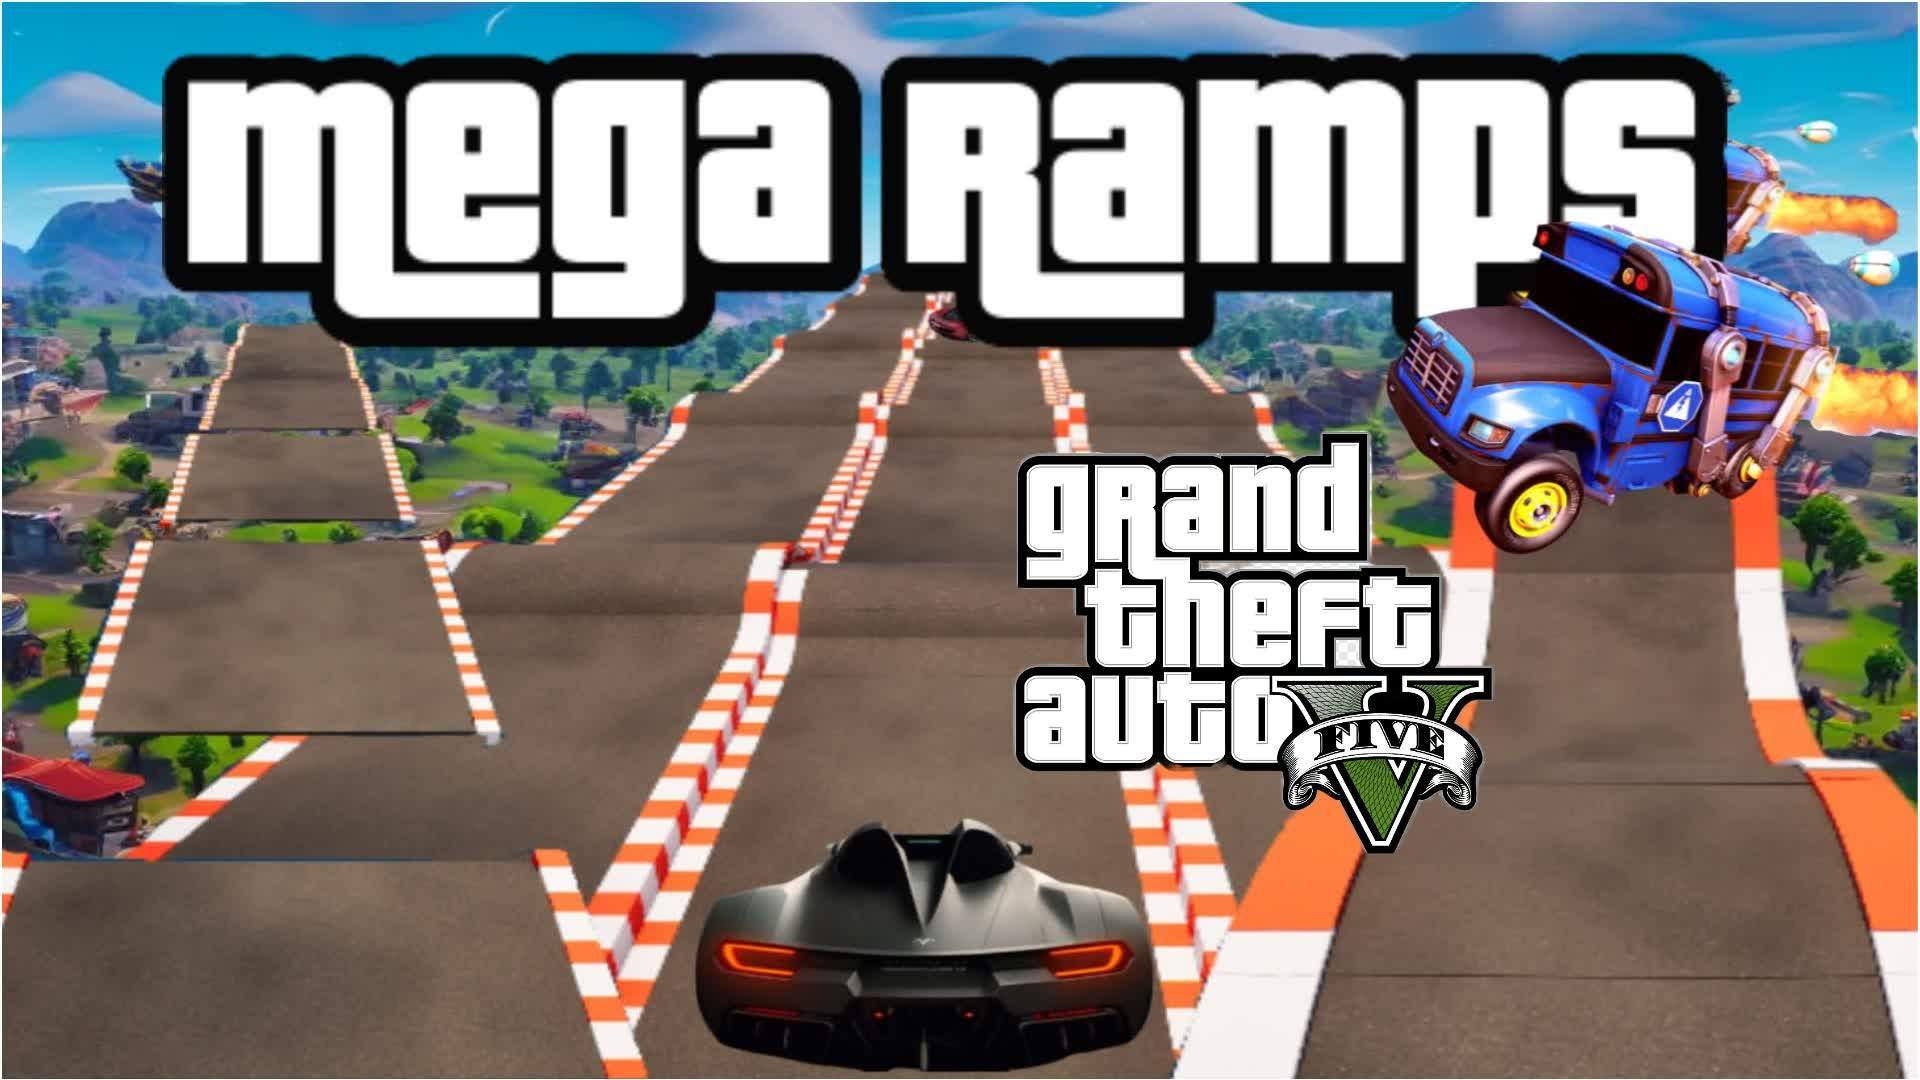 Mega ramps